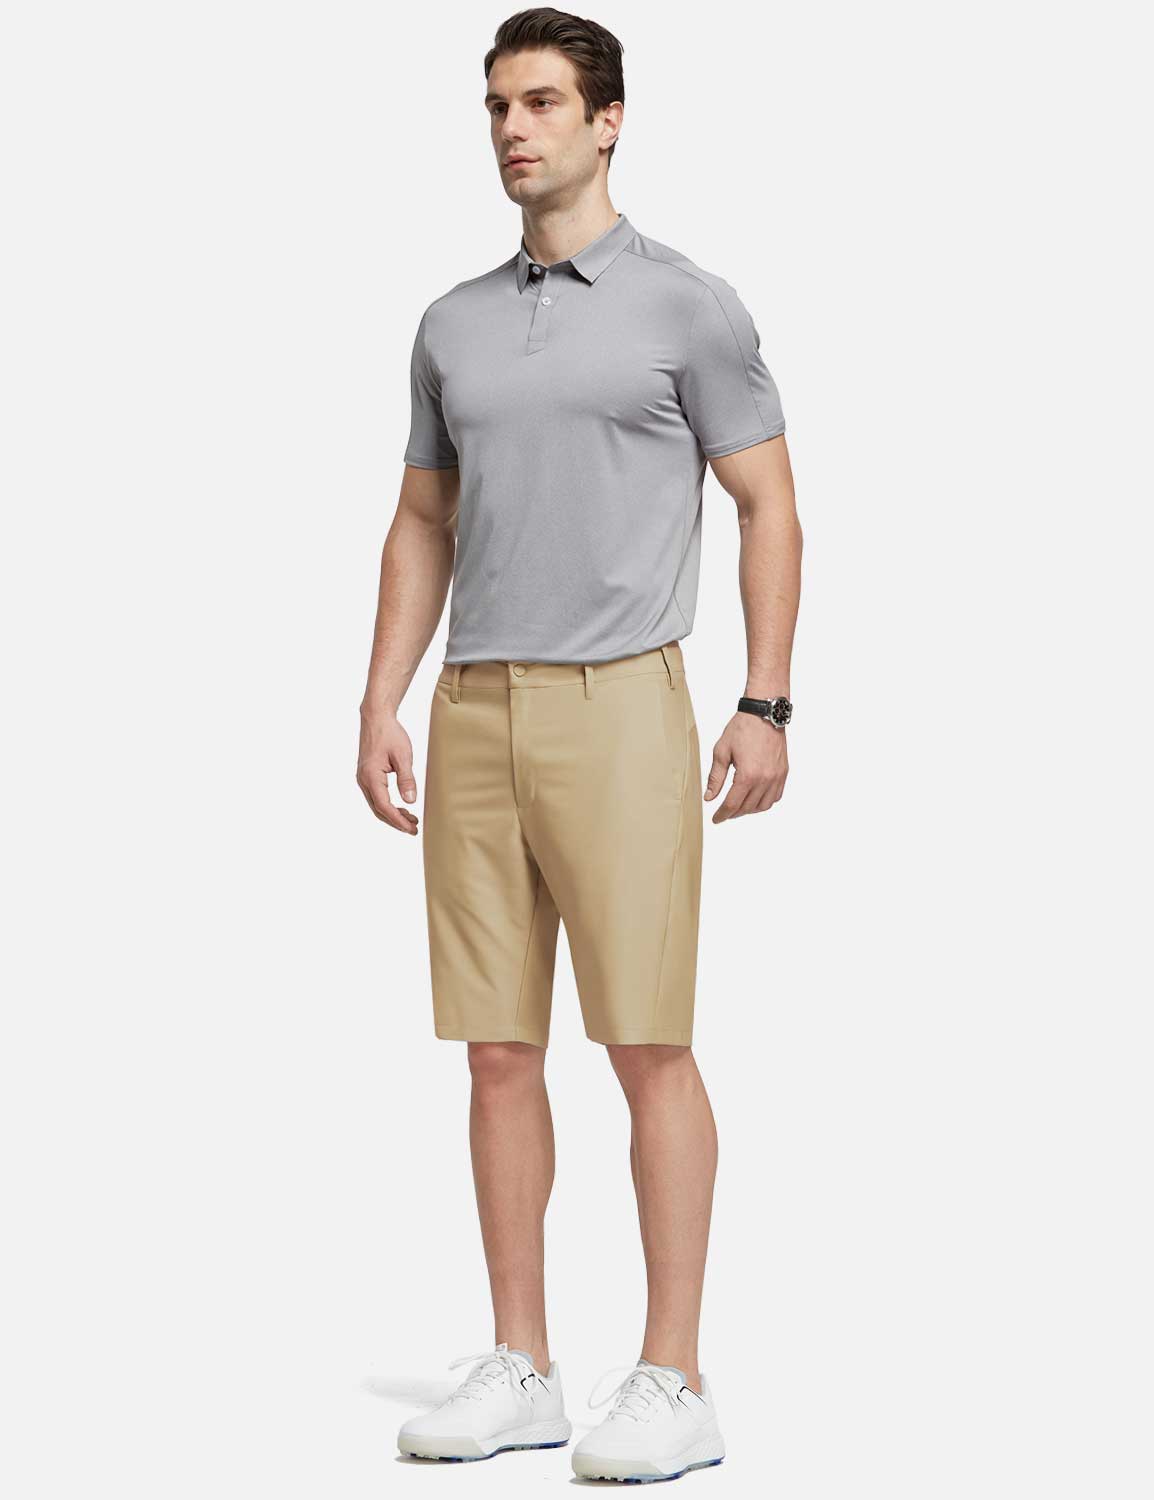 Baleaf Men's 10' UPF 50+ Lightweight Golf Shorts w Zipper Pockets cga005 Khaki Full